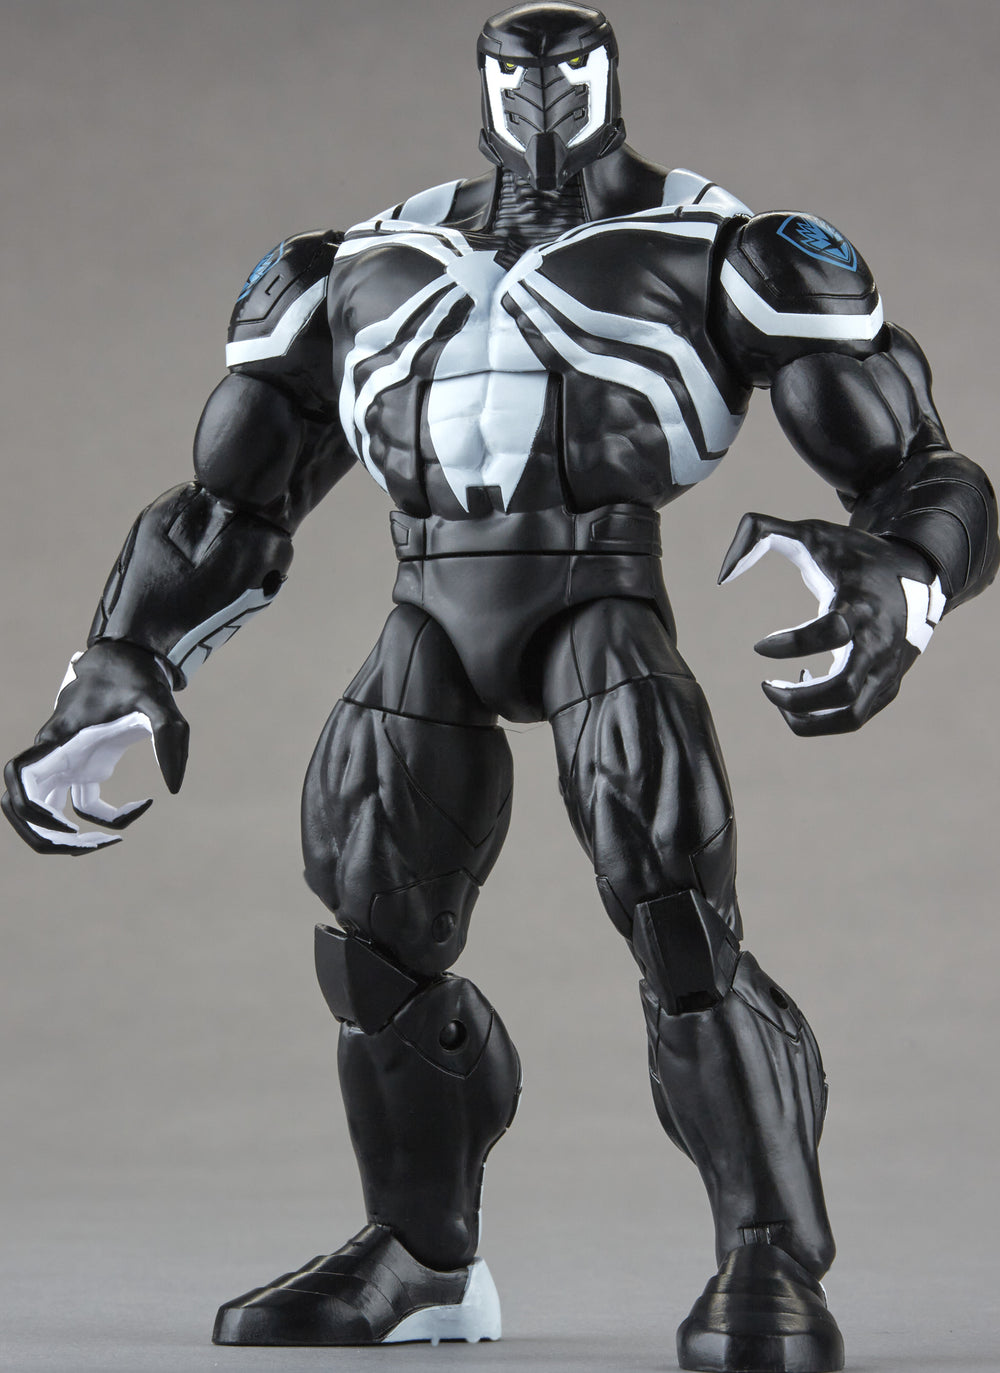 Marvel Legends: Venom Space Knight - Venom Y Mania 2 Pack